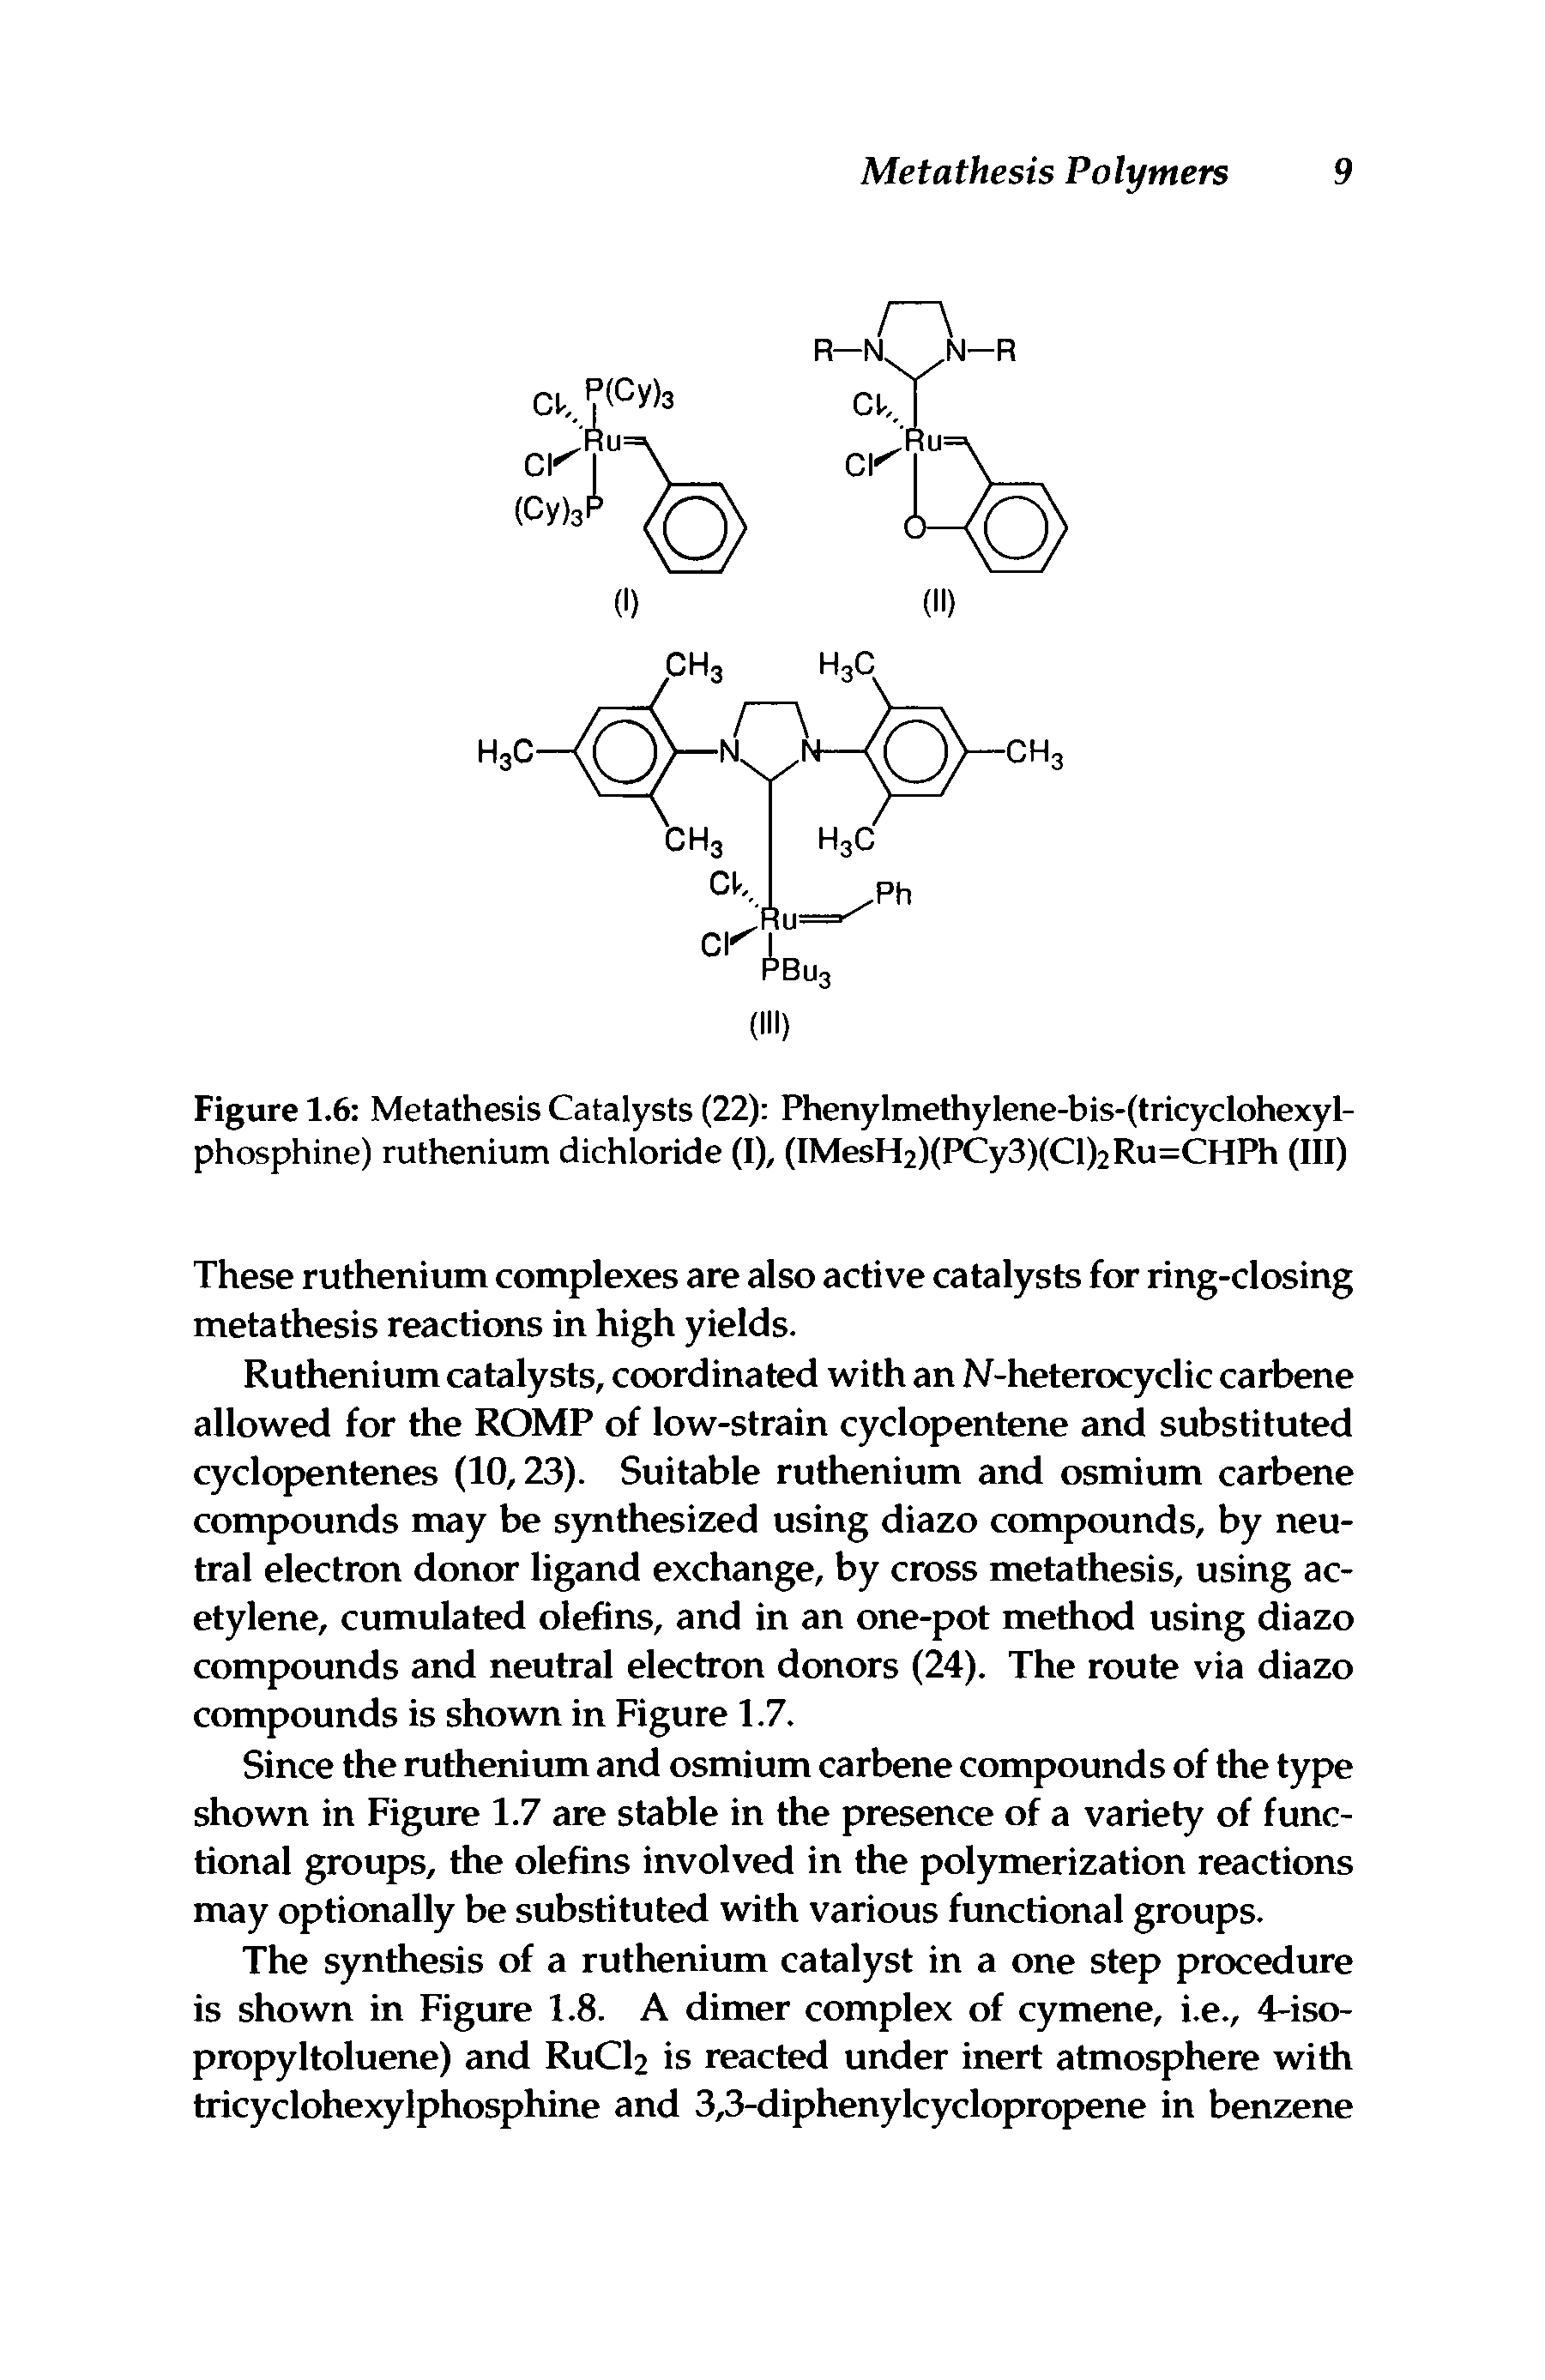 Figure 1.6 Metathesis Catalysts (22) Phenylmethylene-bis-(tricyclohexyl-phosphine) ruthenium dichloride (I), (IMesH2)(PCy3)(Cl)2Ru=CHPh (III)...